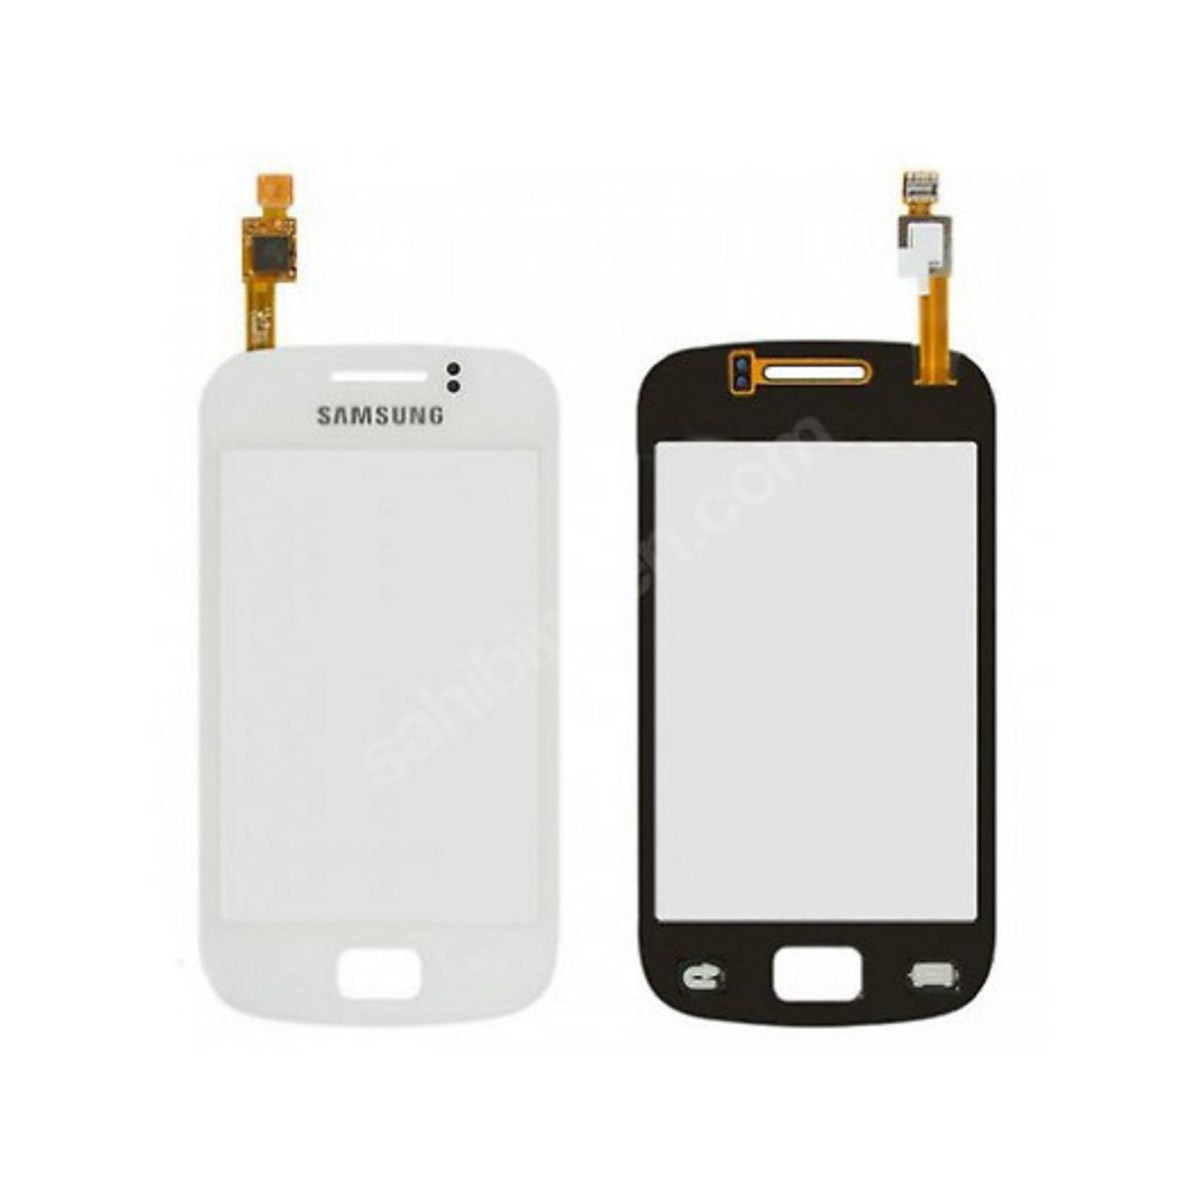 Samsung Galaxy Mini 2 S6500 Dokunmatik Touch Beyaz Çıtasız - tekyerdenal.com